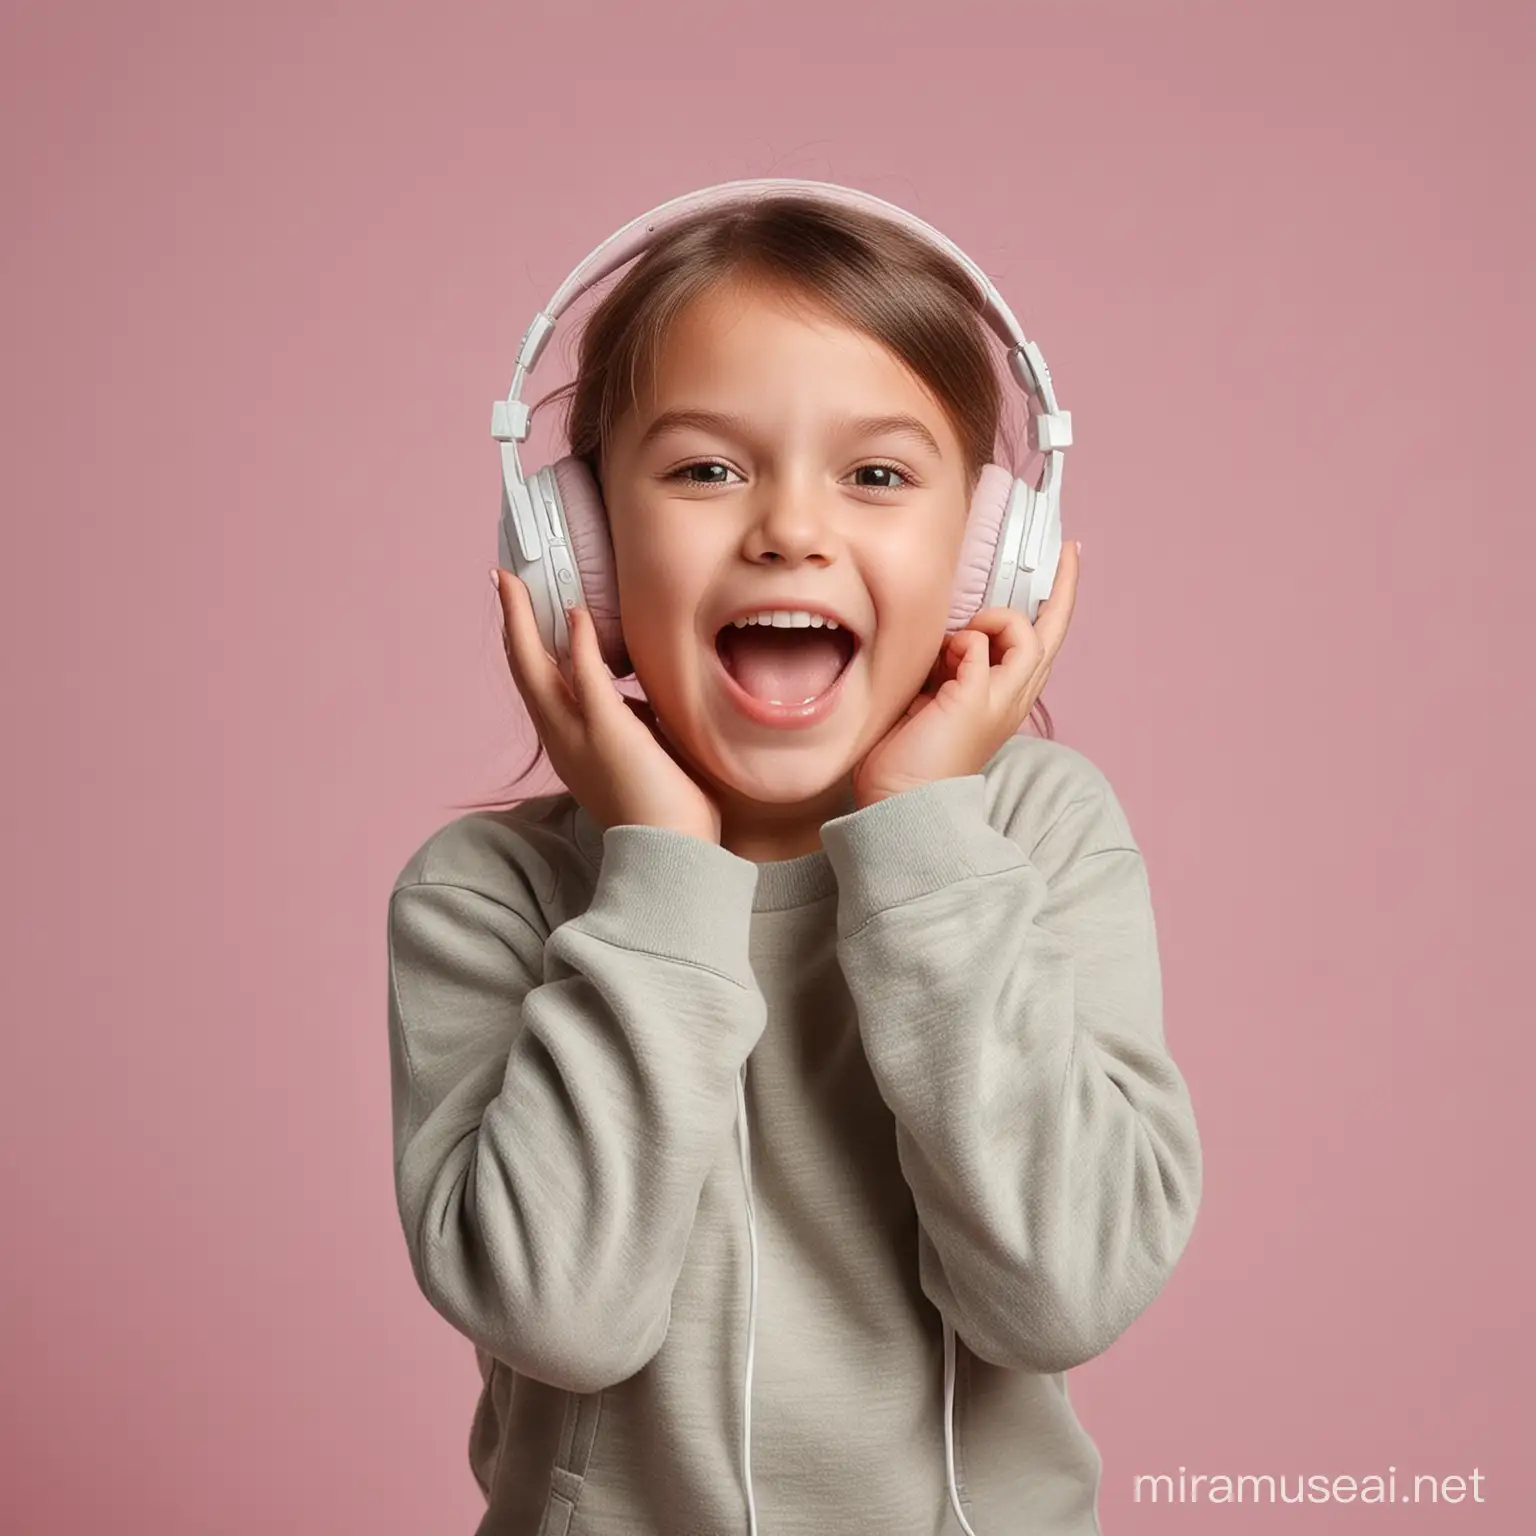 Joyful Child Listening to Music on Vibrant Background